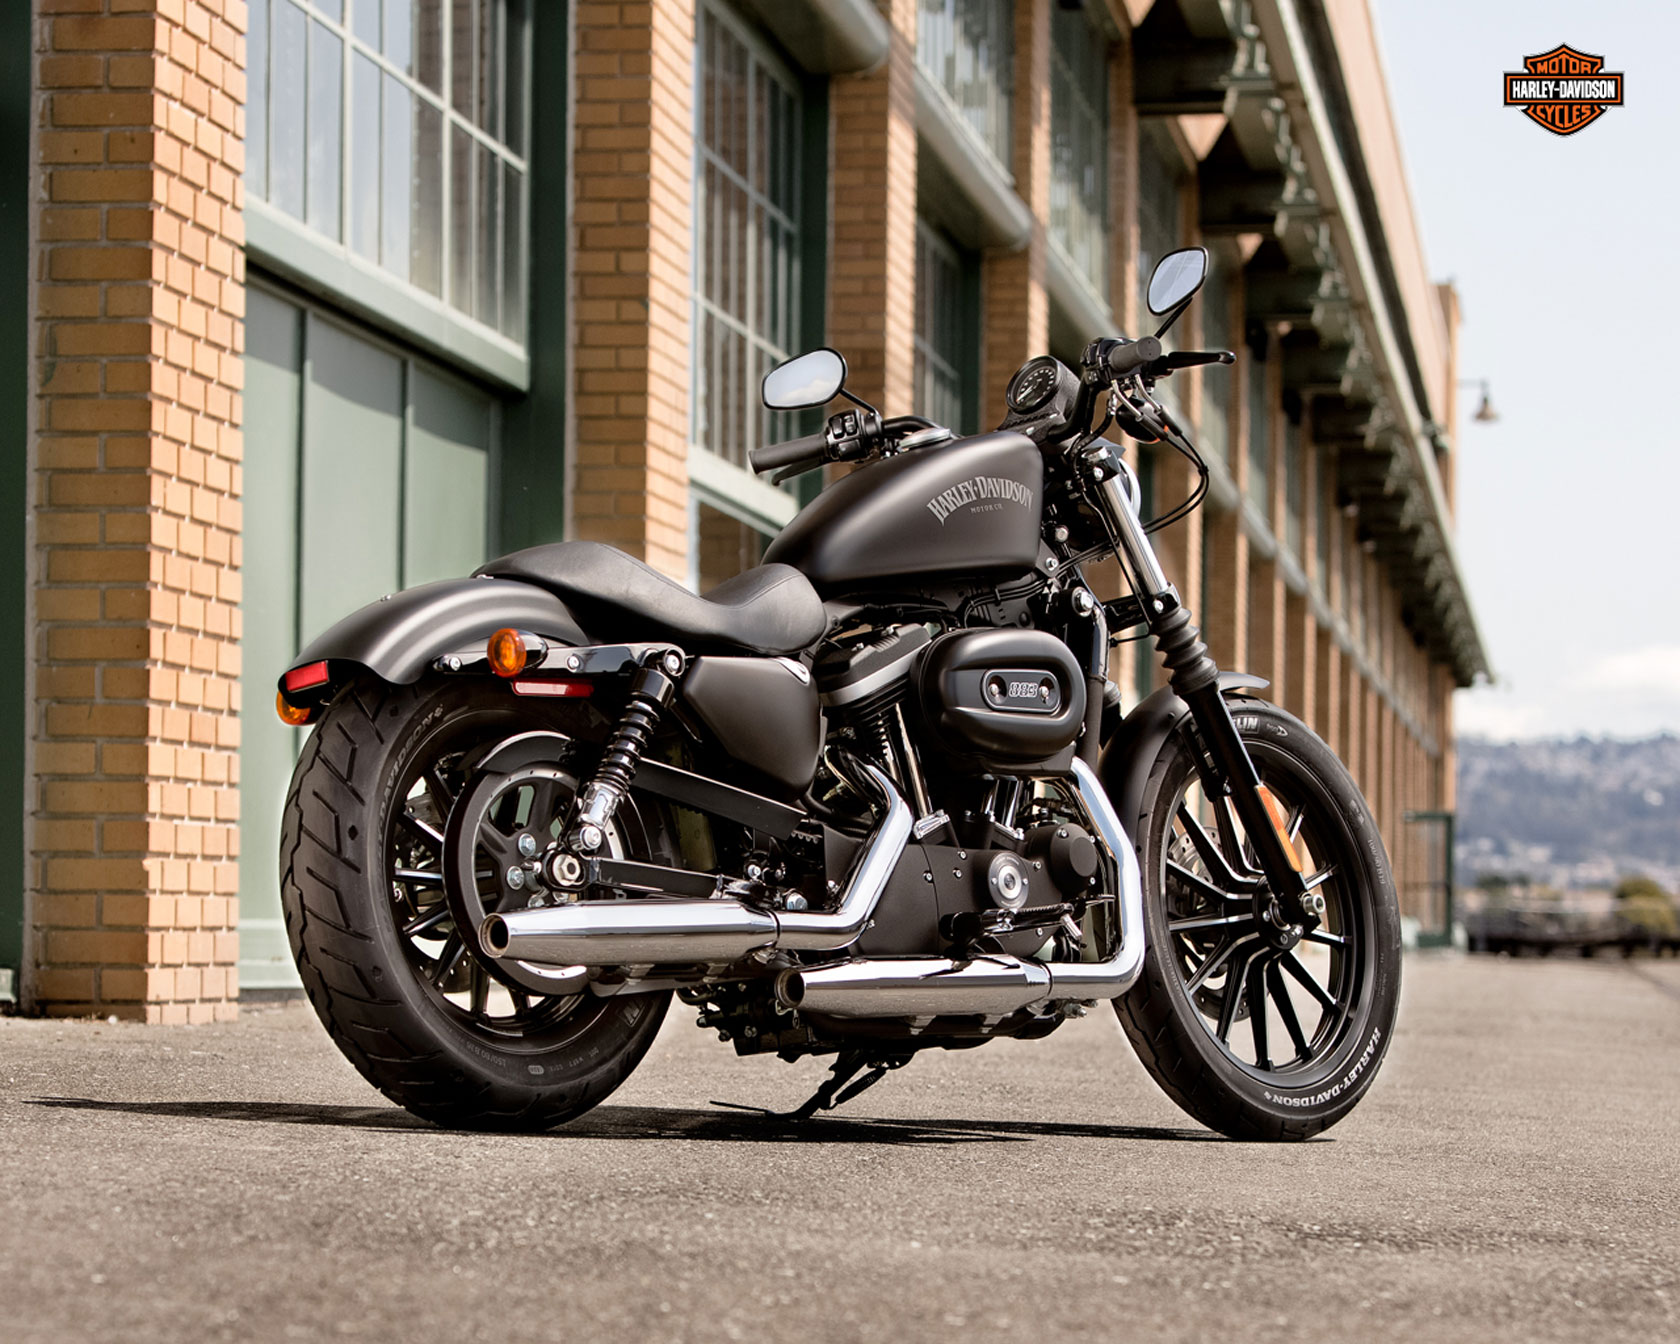 http://www.totalmotorcycle.com/motorcycles/2013models/2013-Harley-Davidson-Sportster-XL883NIron883b.jpg